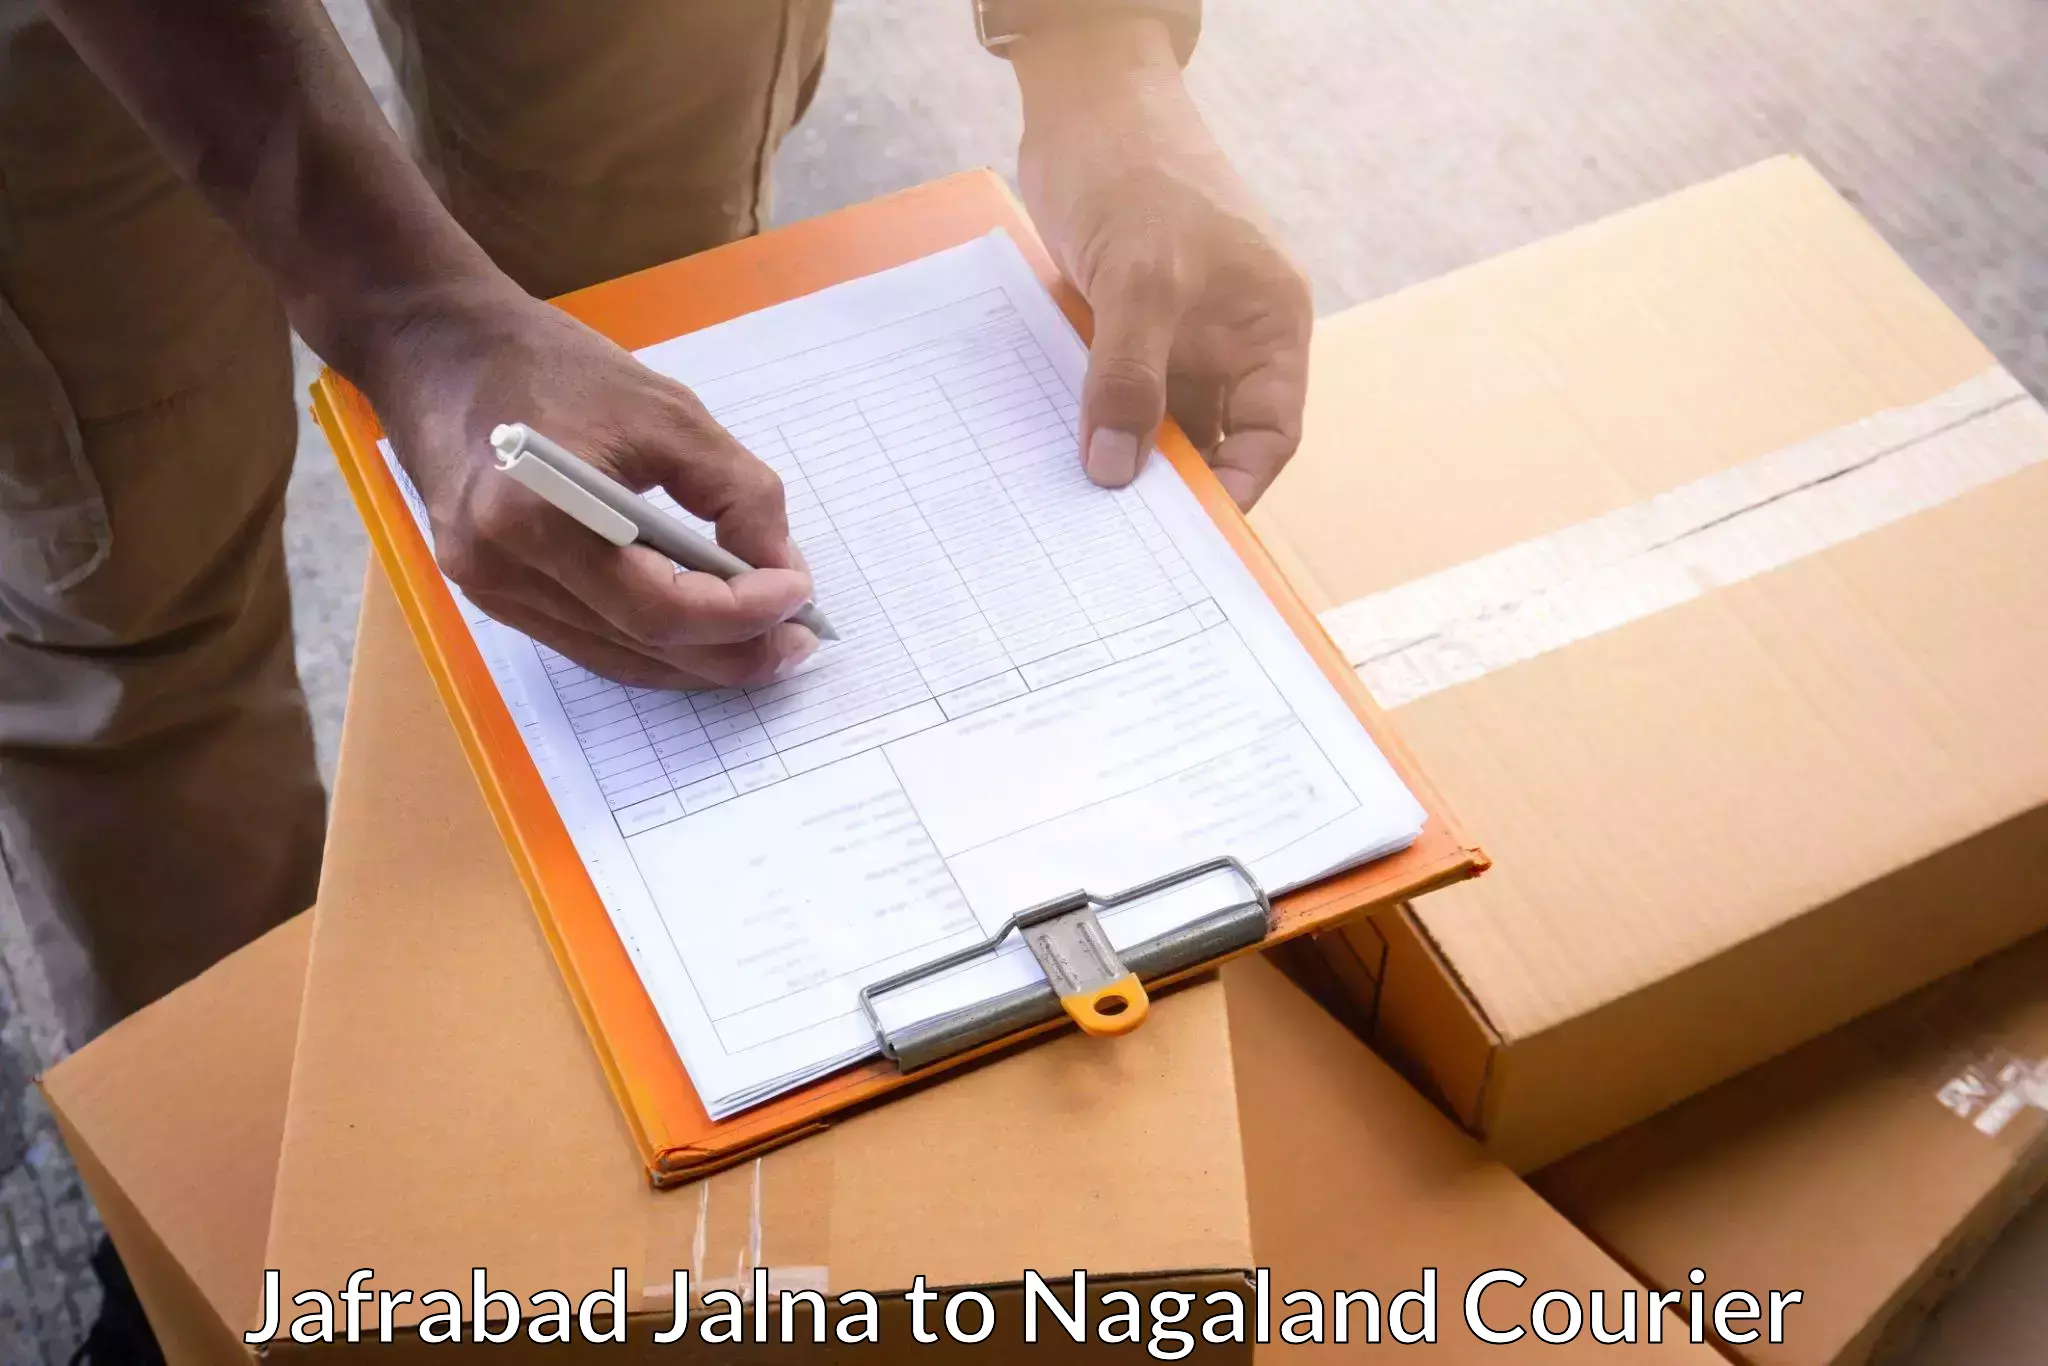 Global logistics network Jafrabad Jalna to Kiphire